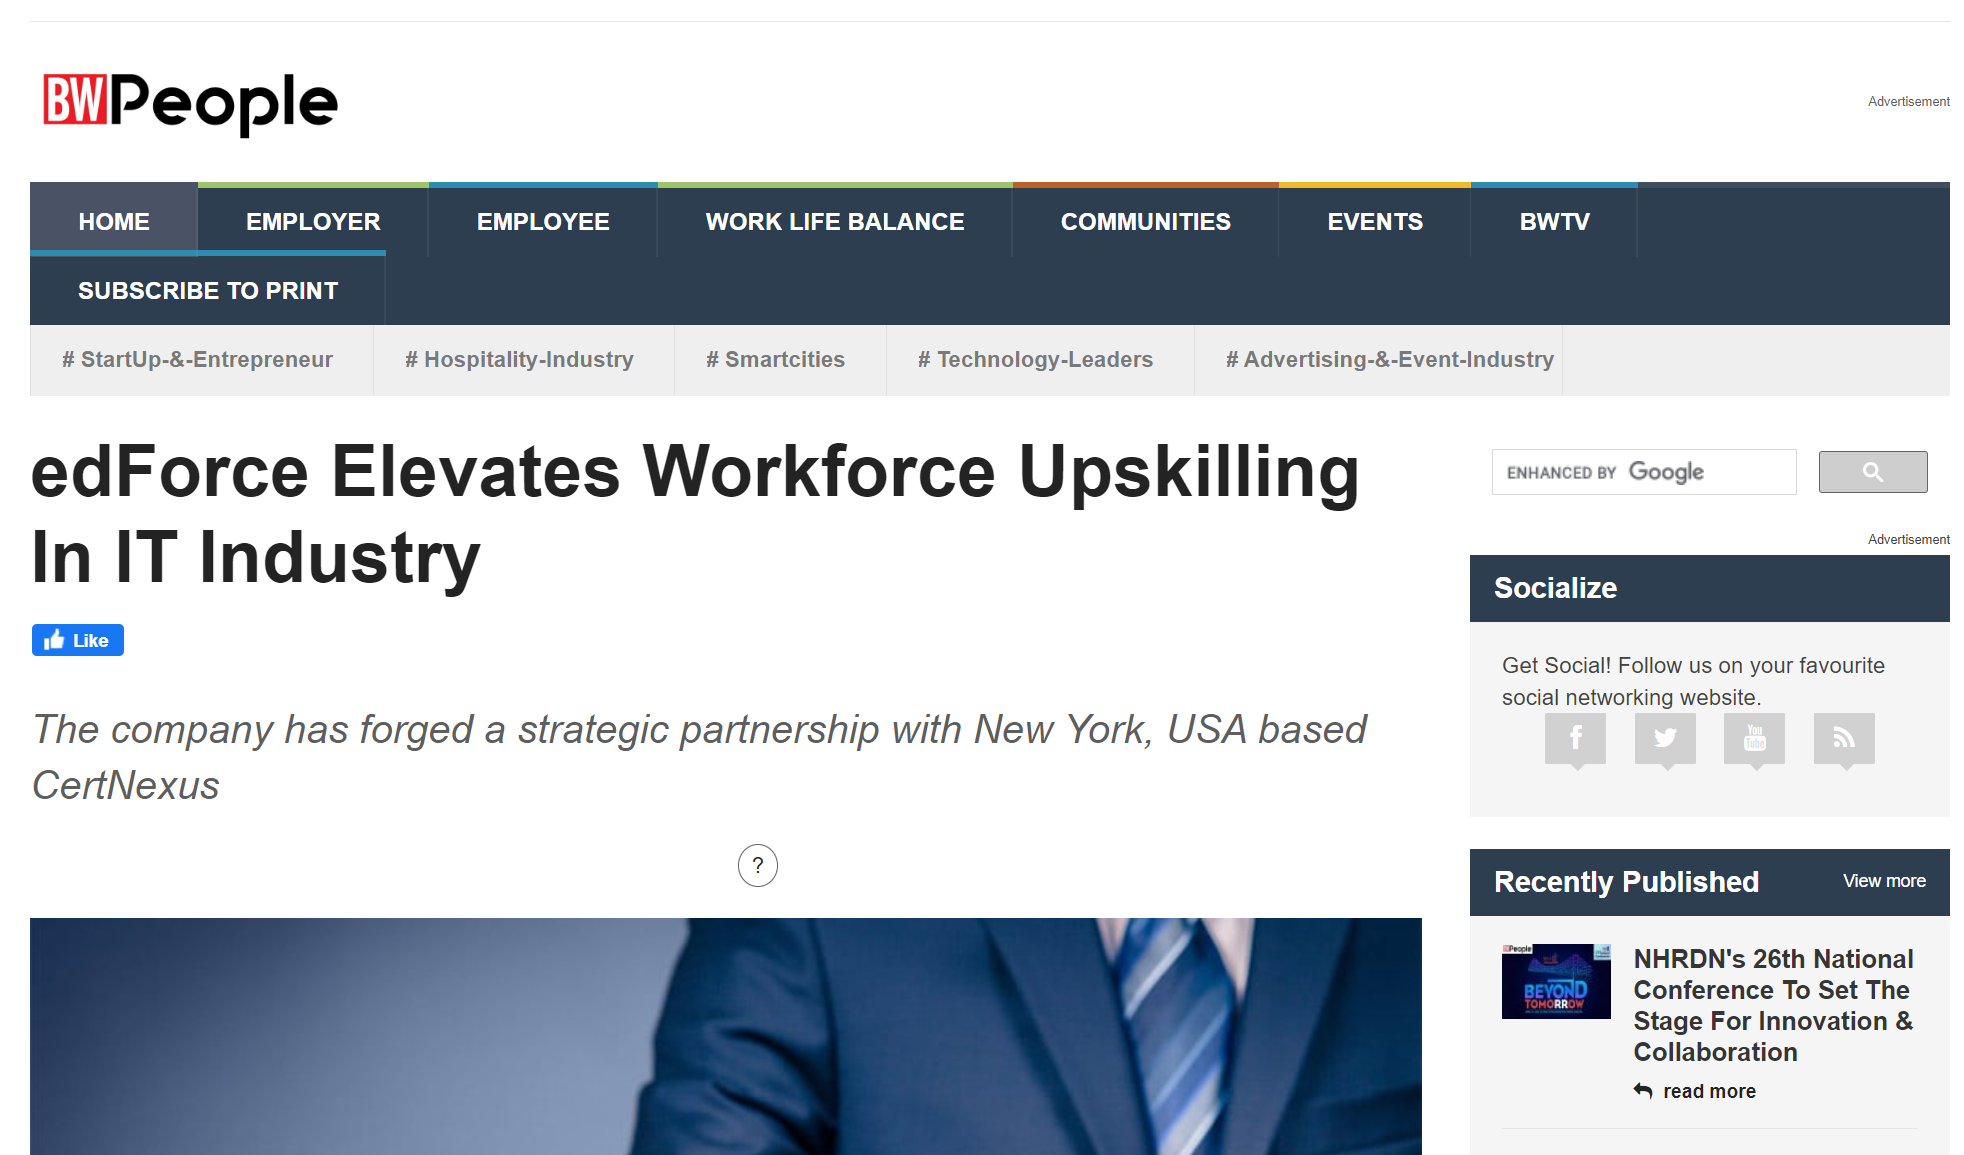 Bw edForce Elevates Workforce Upskilling In IT Industry